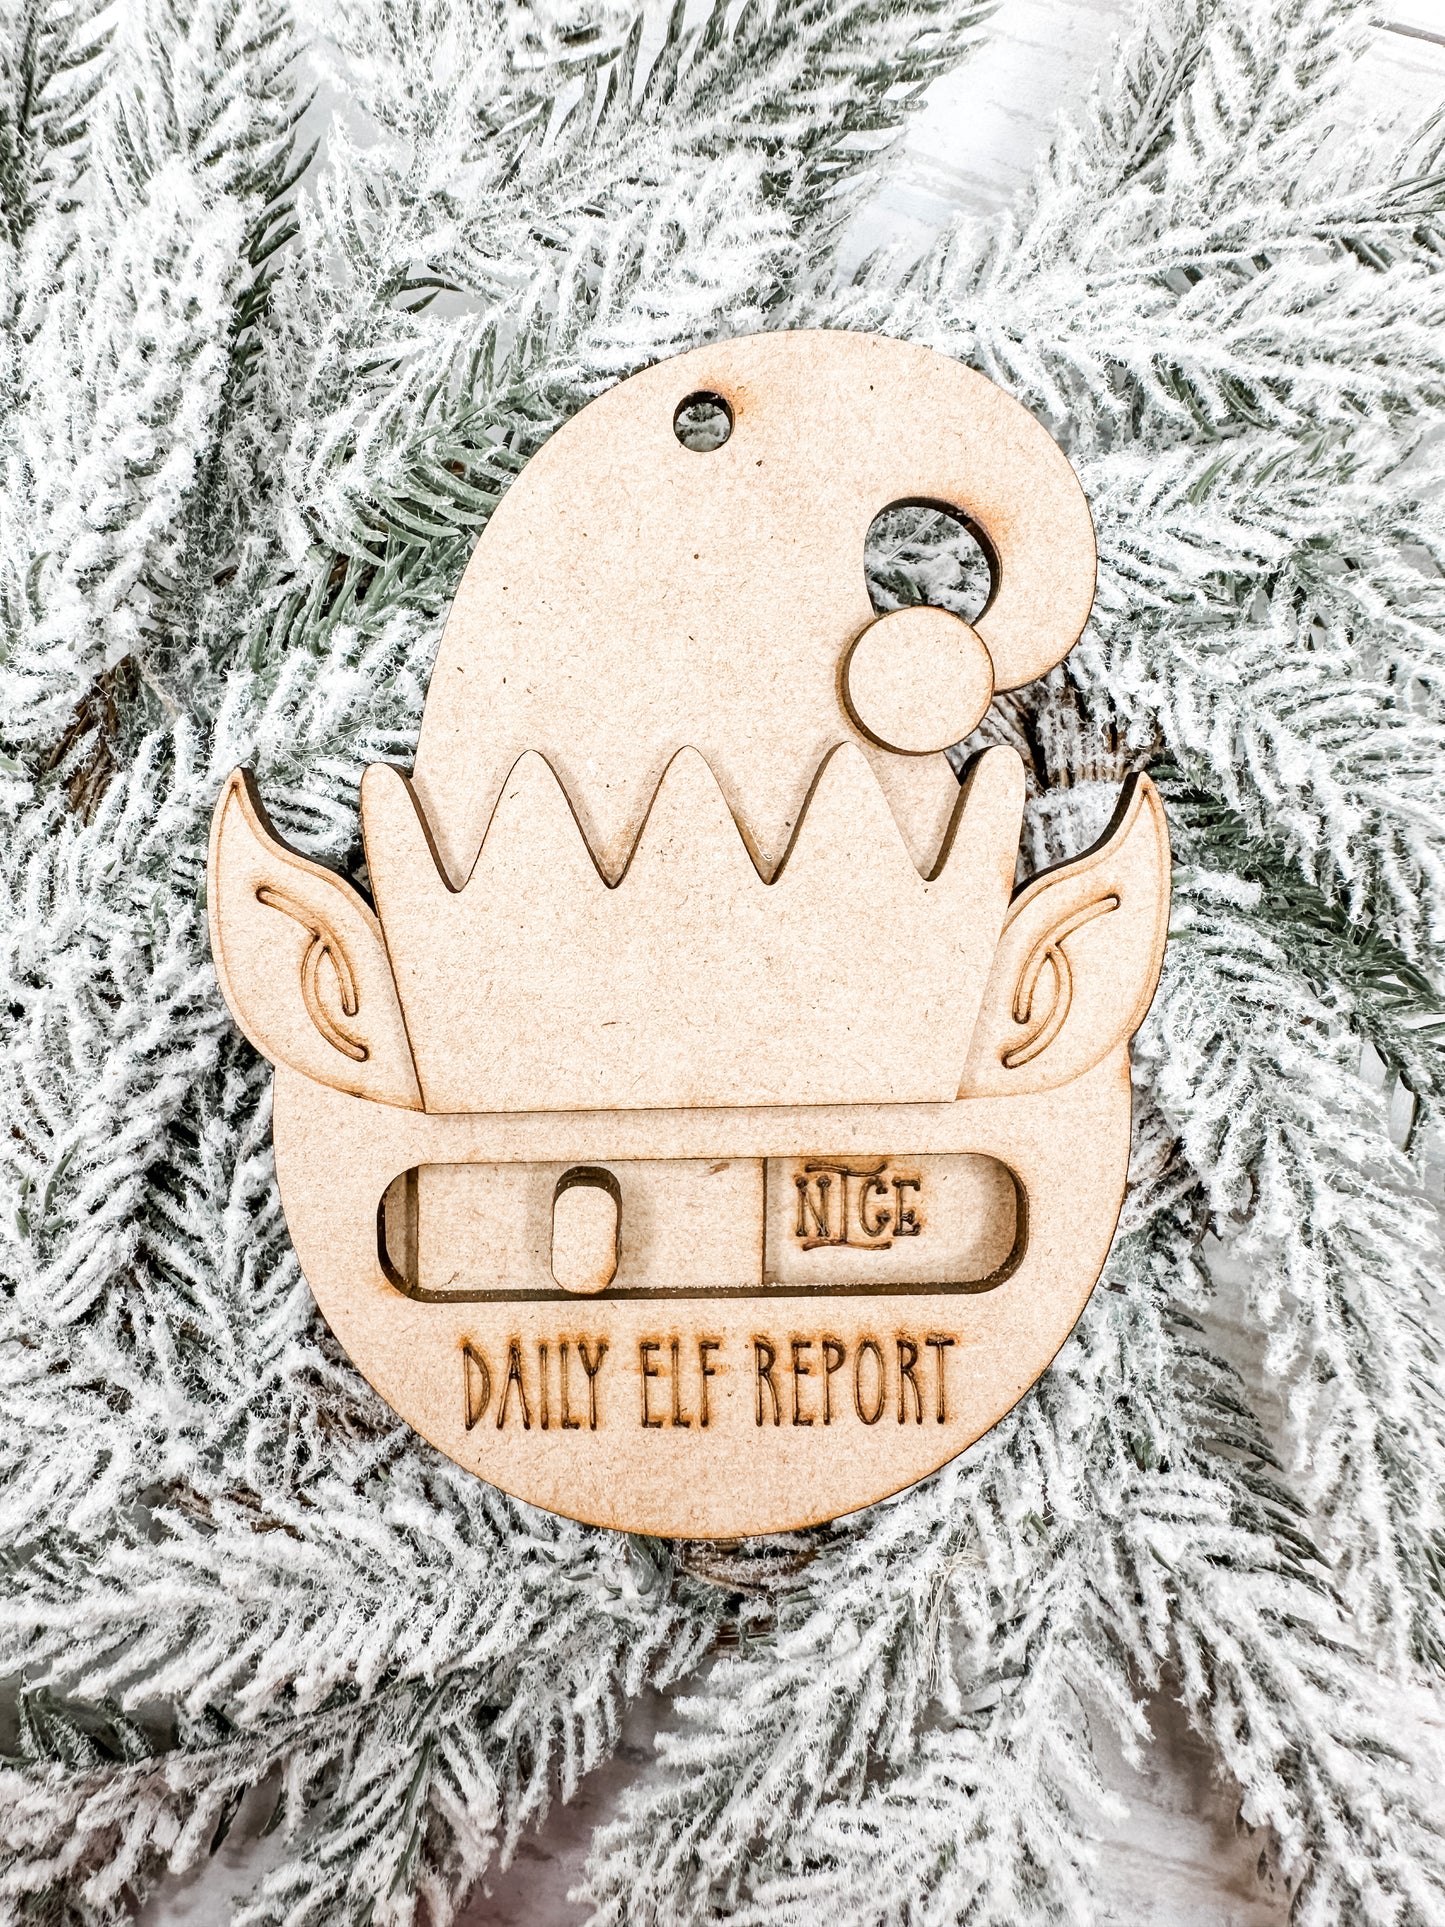 Daily Elf Report Naughty or Nice Ornament DIY Kit